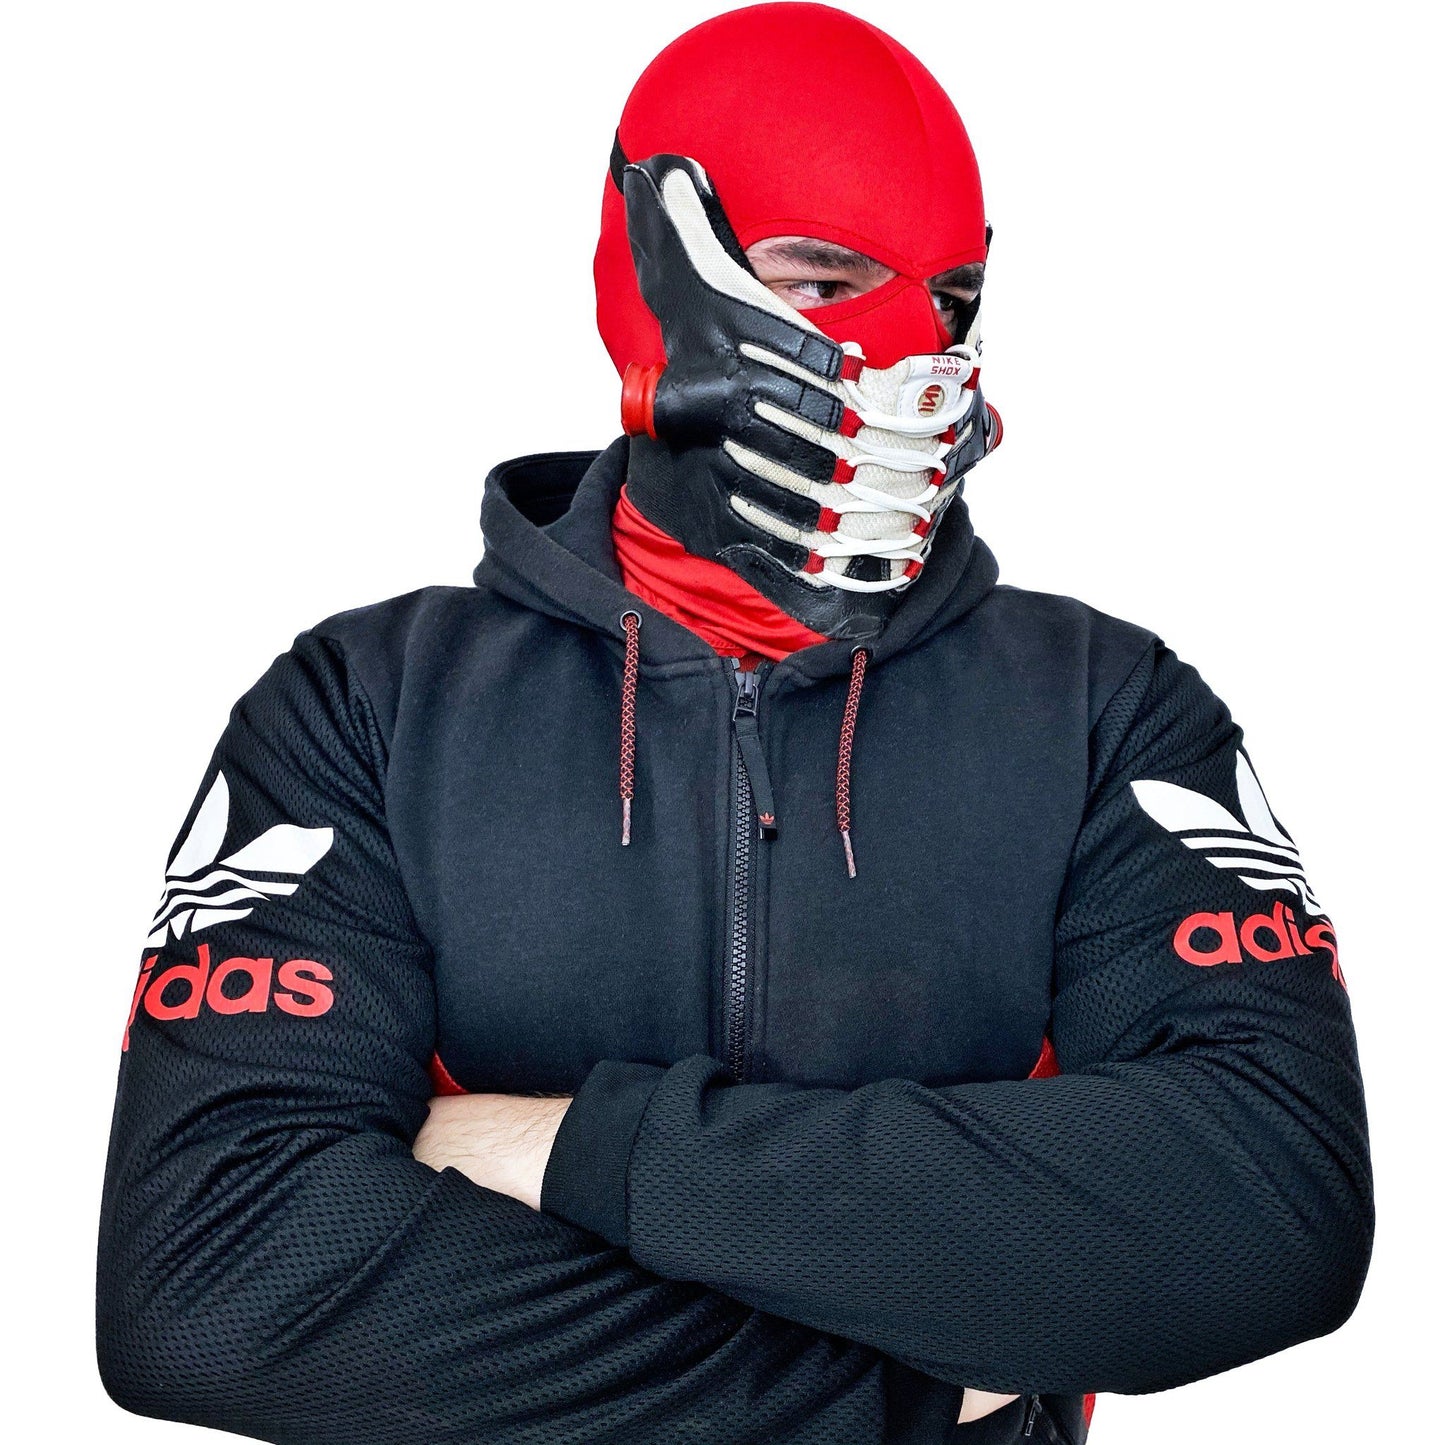 Nike Shox NZ Black - Red Mask